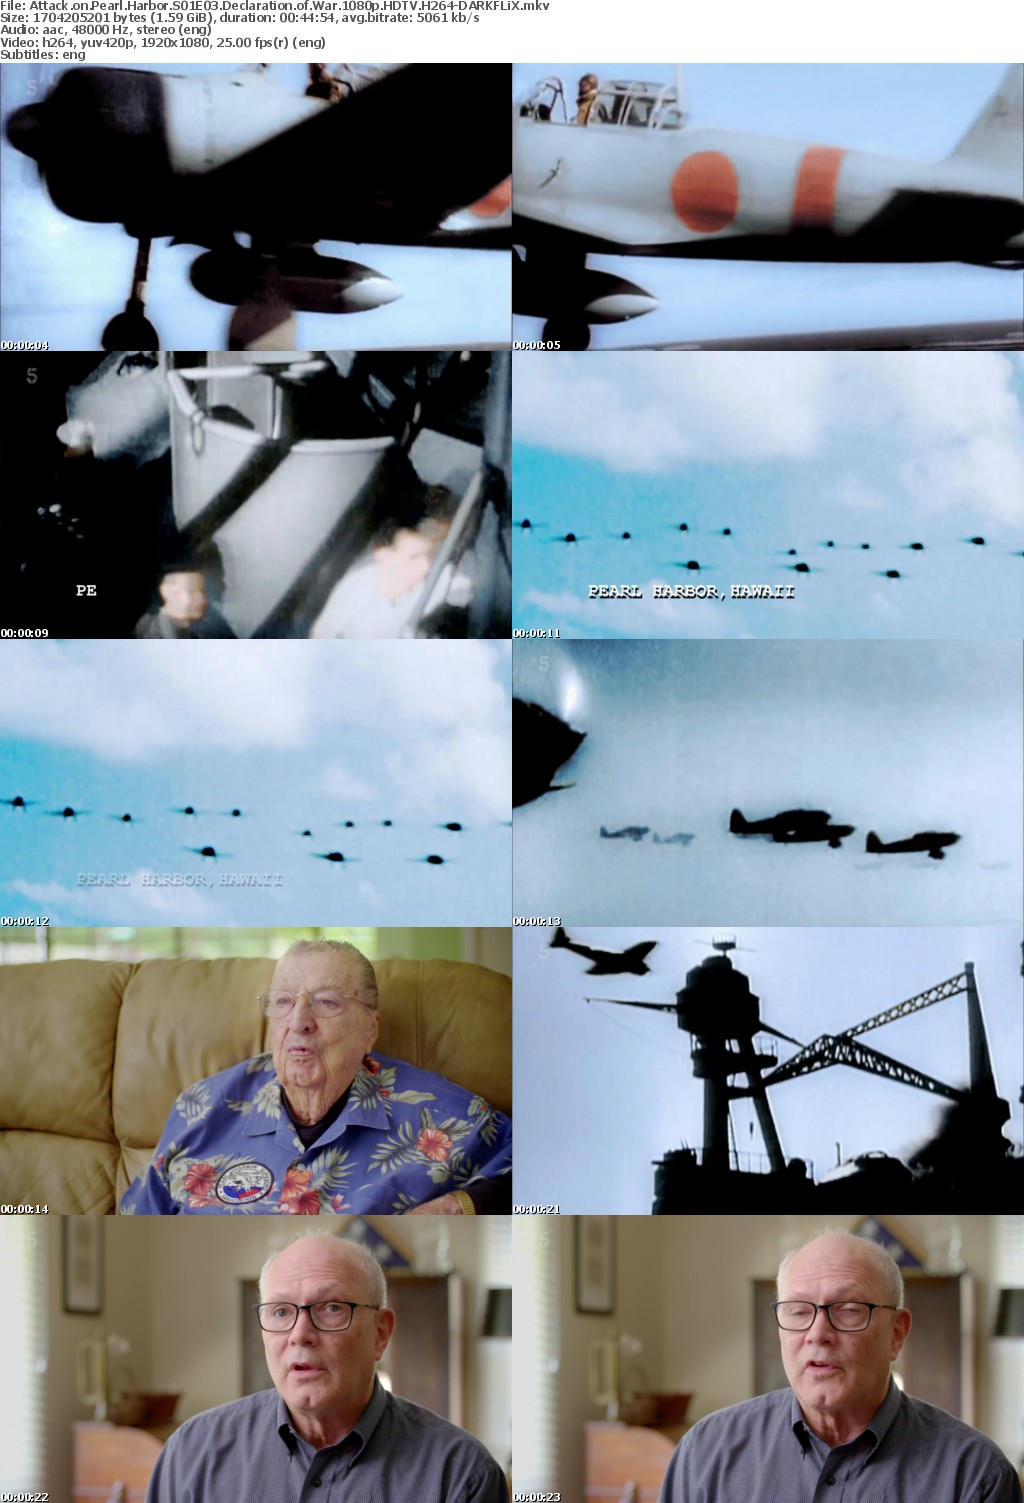 Attack on Pearl Harbor S01E03 Declaration of War 1080p HDTV H264-DARKFLiX